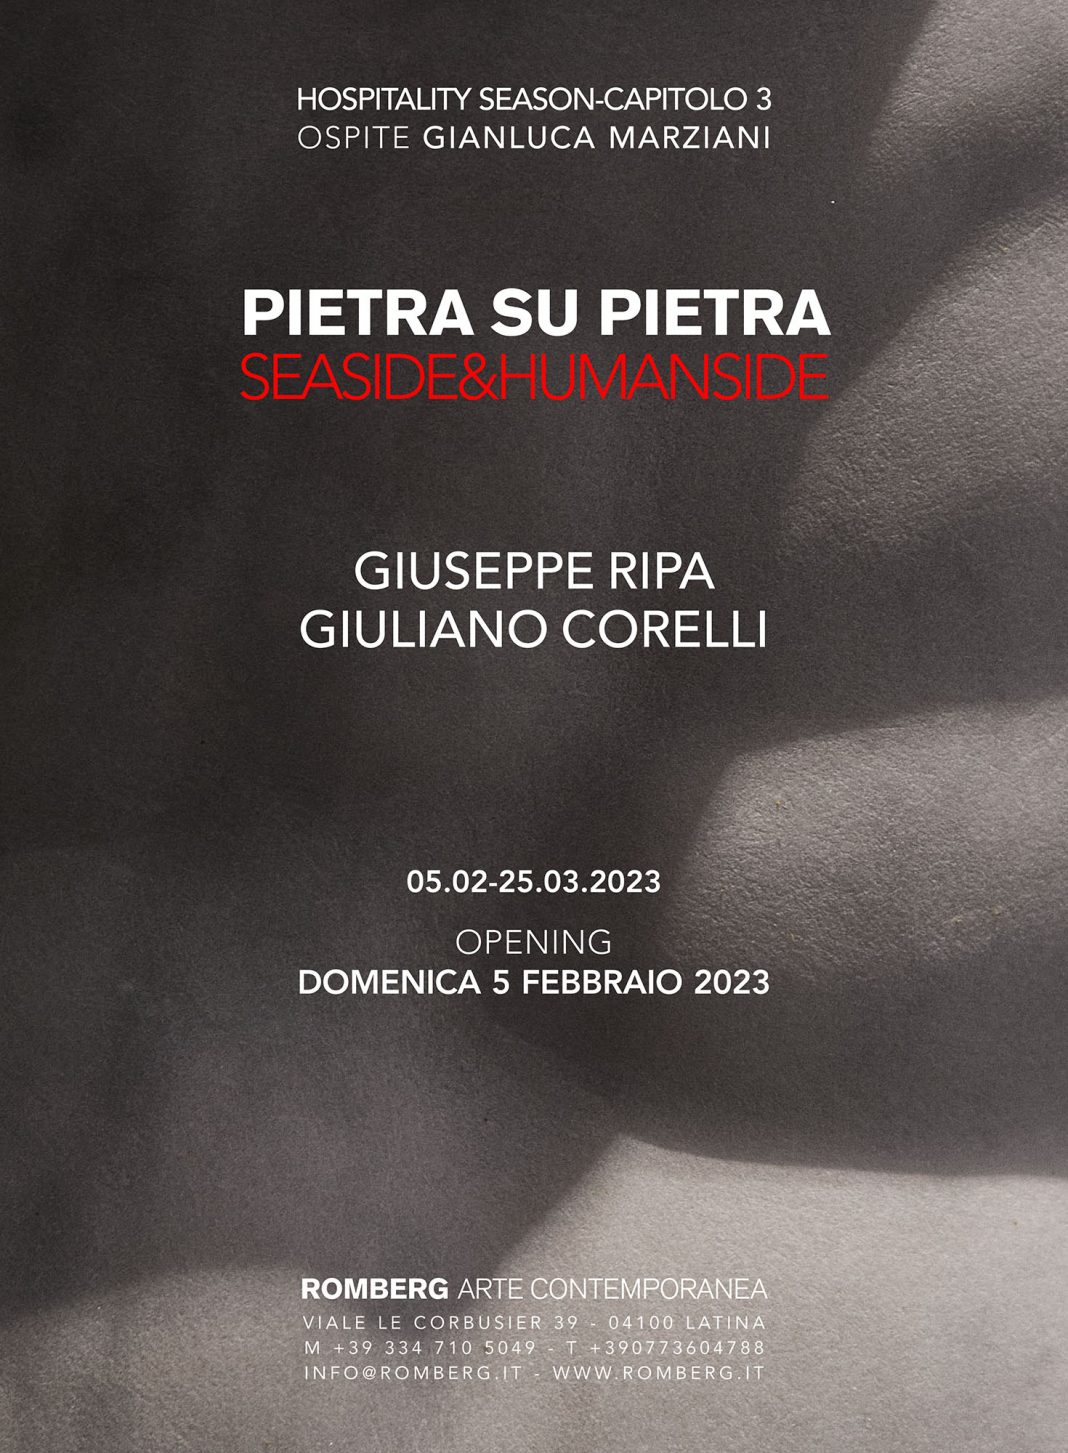 Giuseppe Ripa / Giuliano Corelli – Pietra su Pietra [Seaside&Humanside]https://www.exibart.com/repository/media/formidable/11/img/264/Pietra-su-Pietra-Inaugurazione-Romberg-1068x1453.jpg